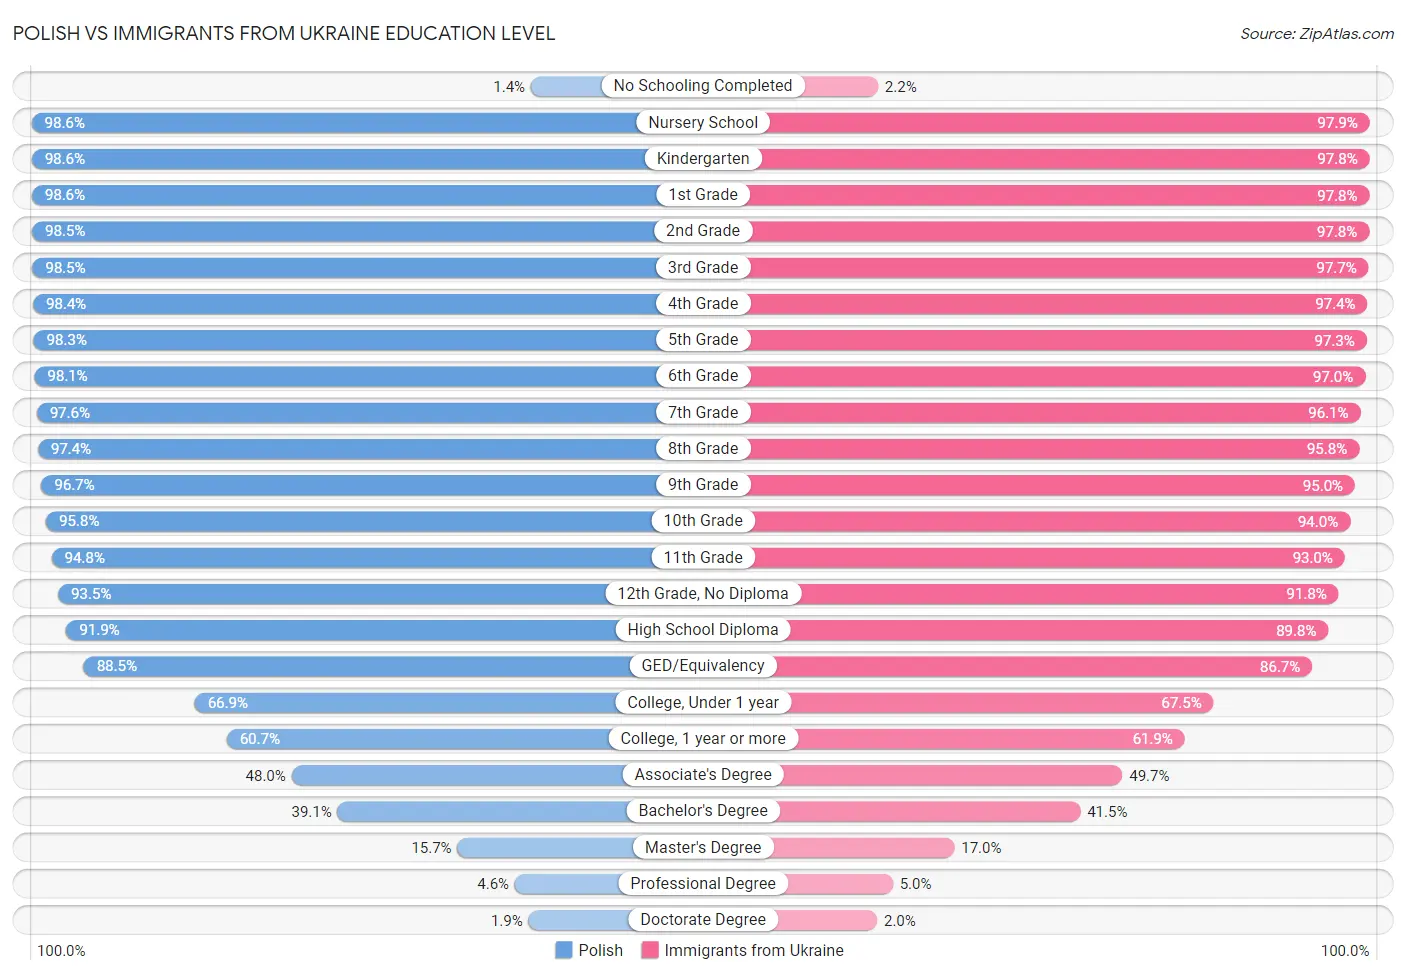 Polish vs Immigrants from Ukraine Education Level